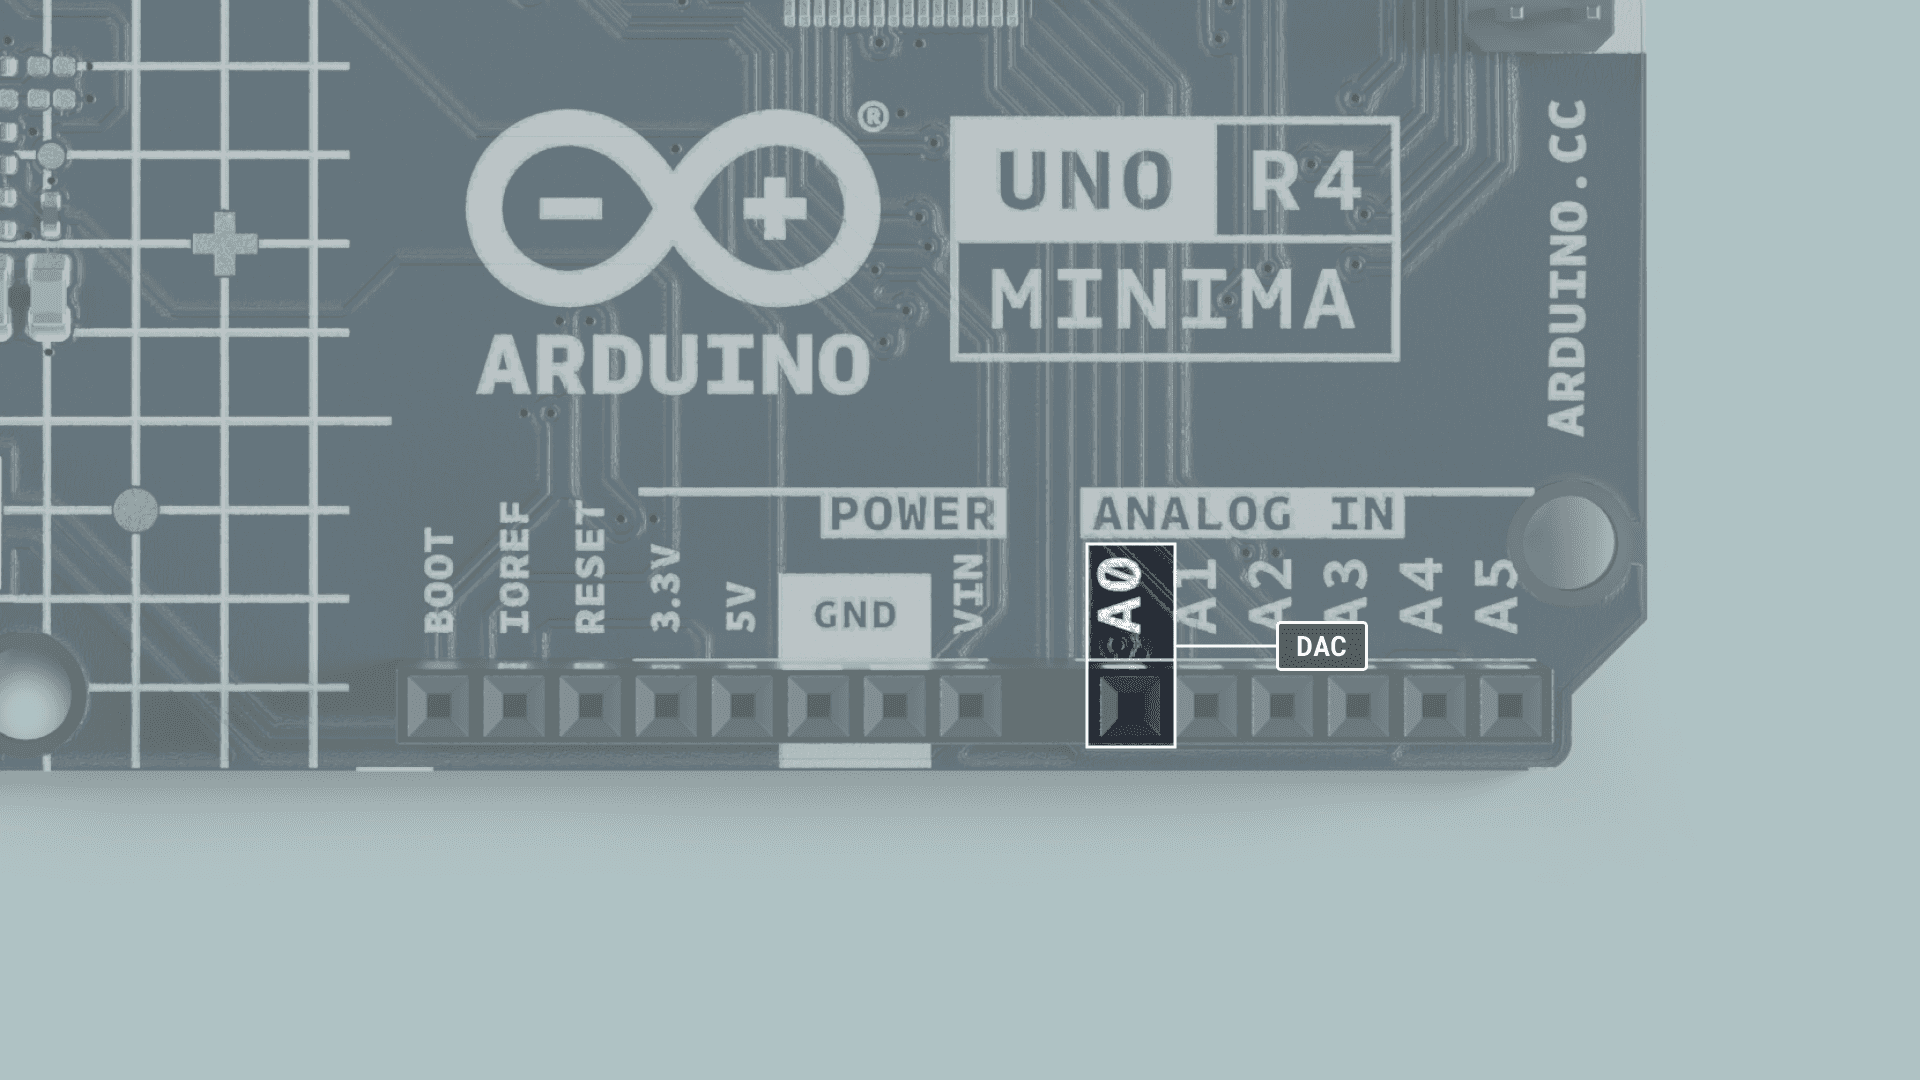 Arduino Uno R4 - Minima & WiFi - Getting Started